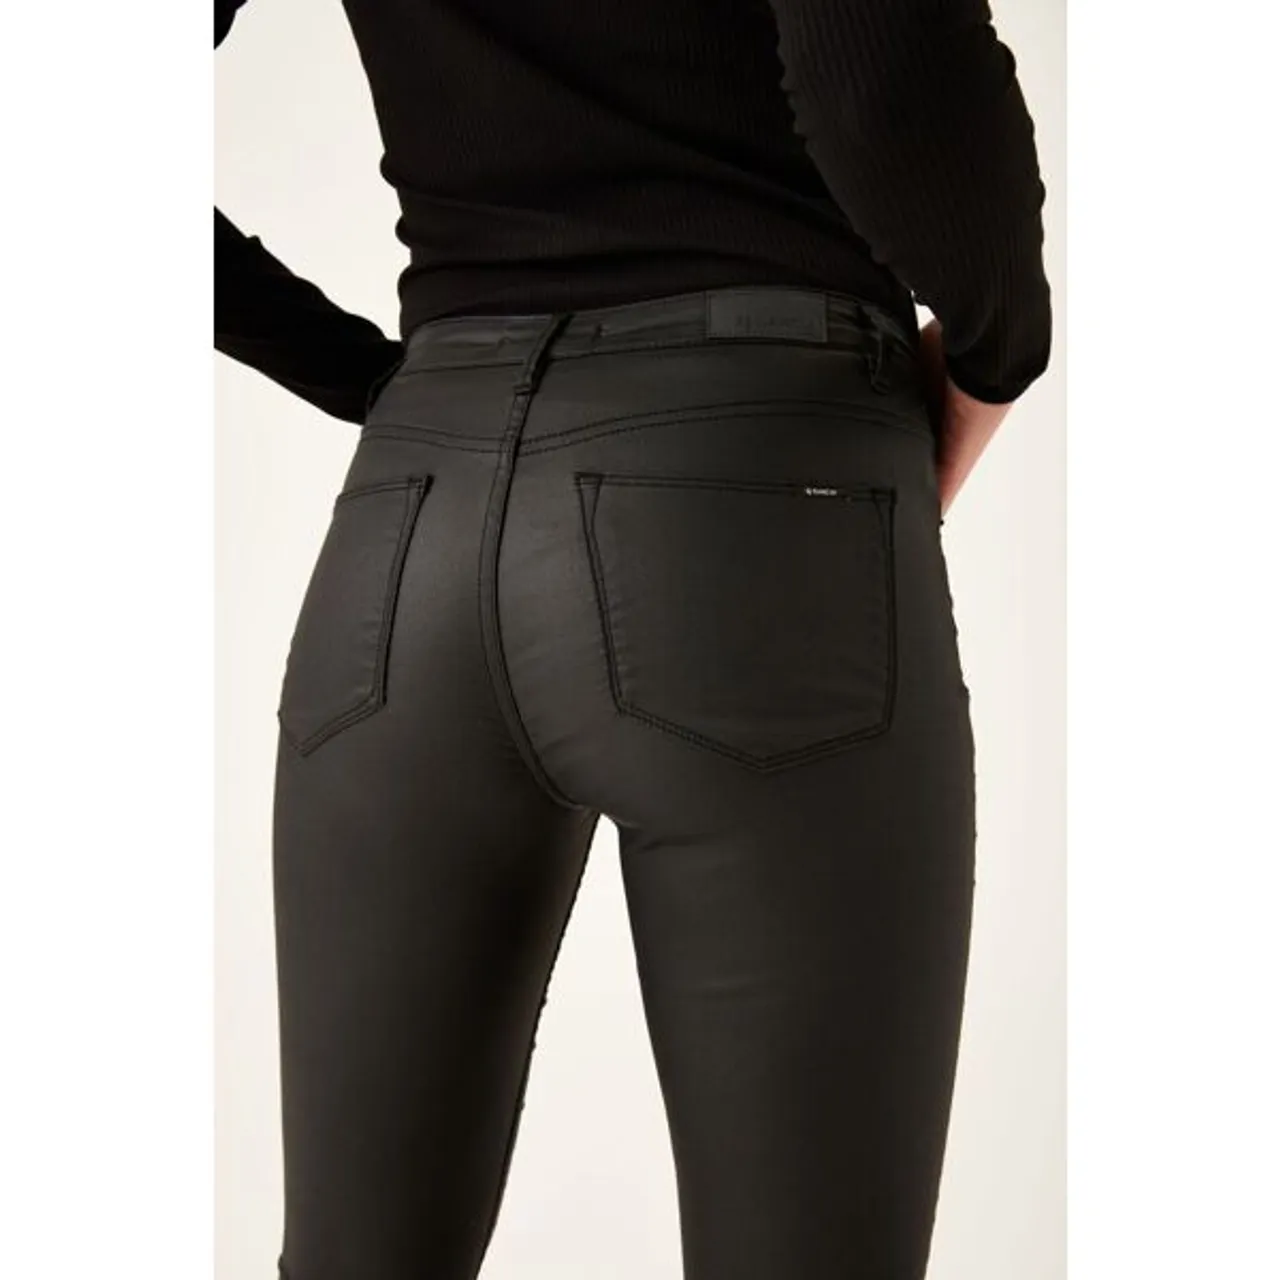 High-waist-Jeans GARCIA "Celia superslim" Gr. 30, Länge 28, schwarz (black) Damen Jeans Röhrenjeans